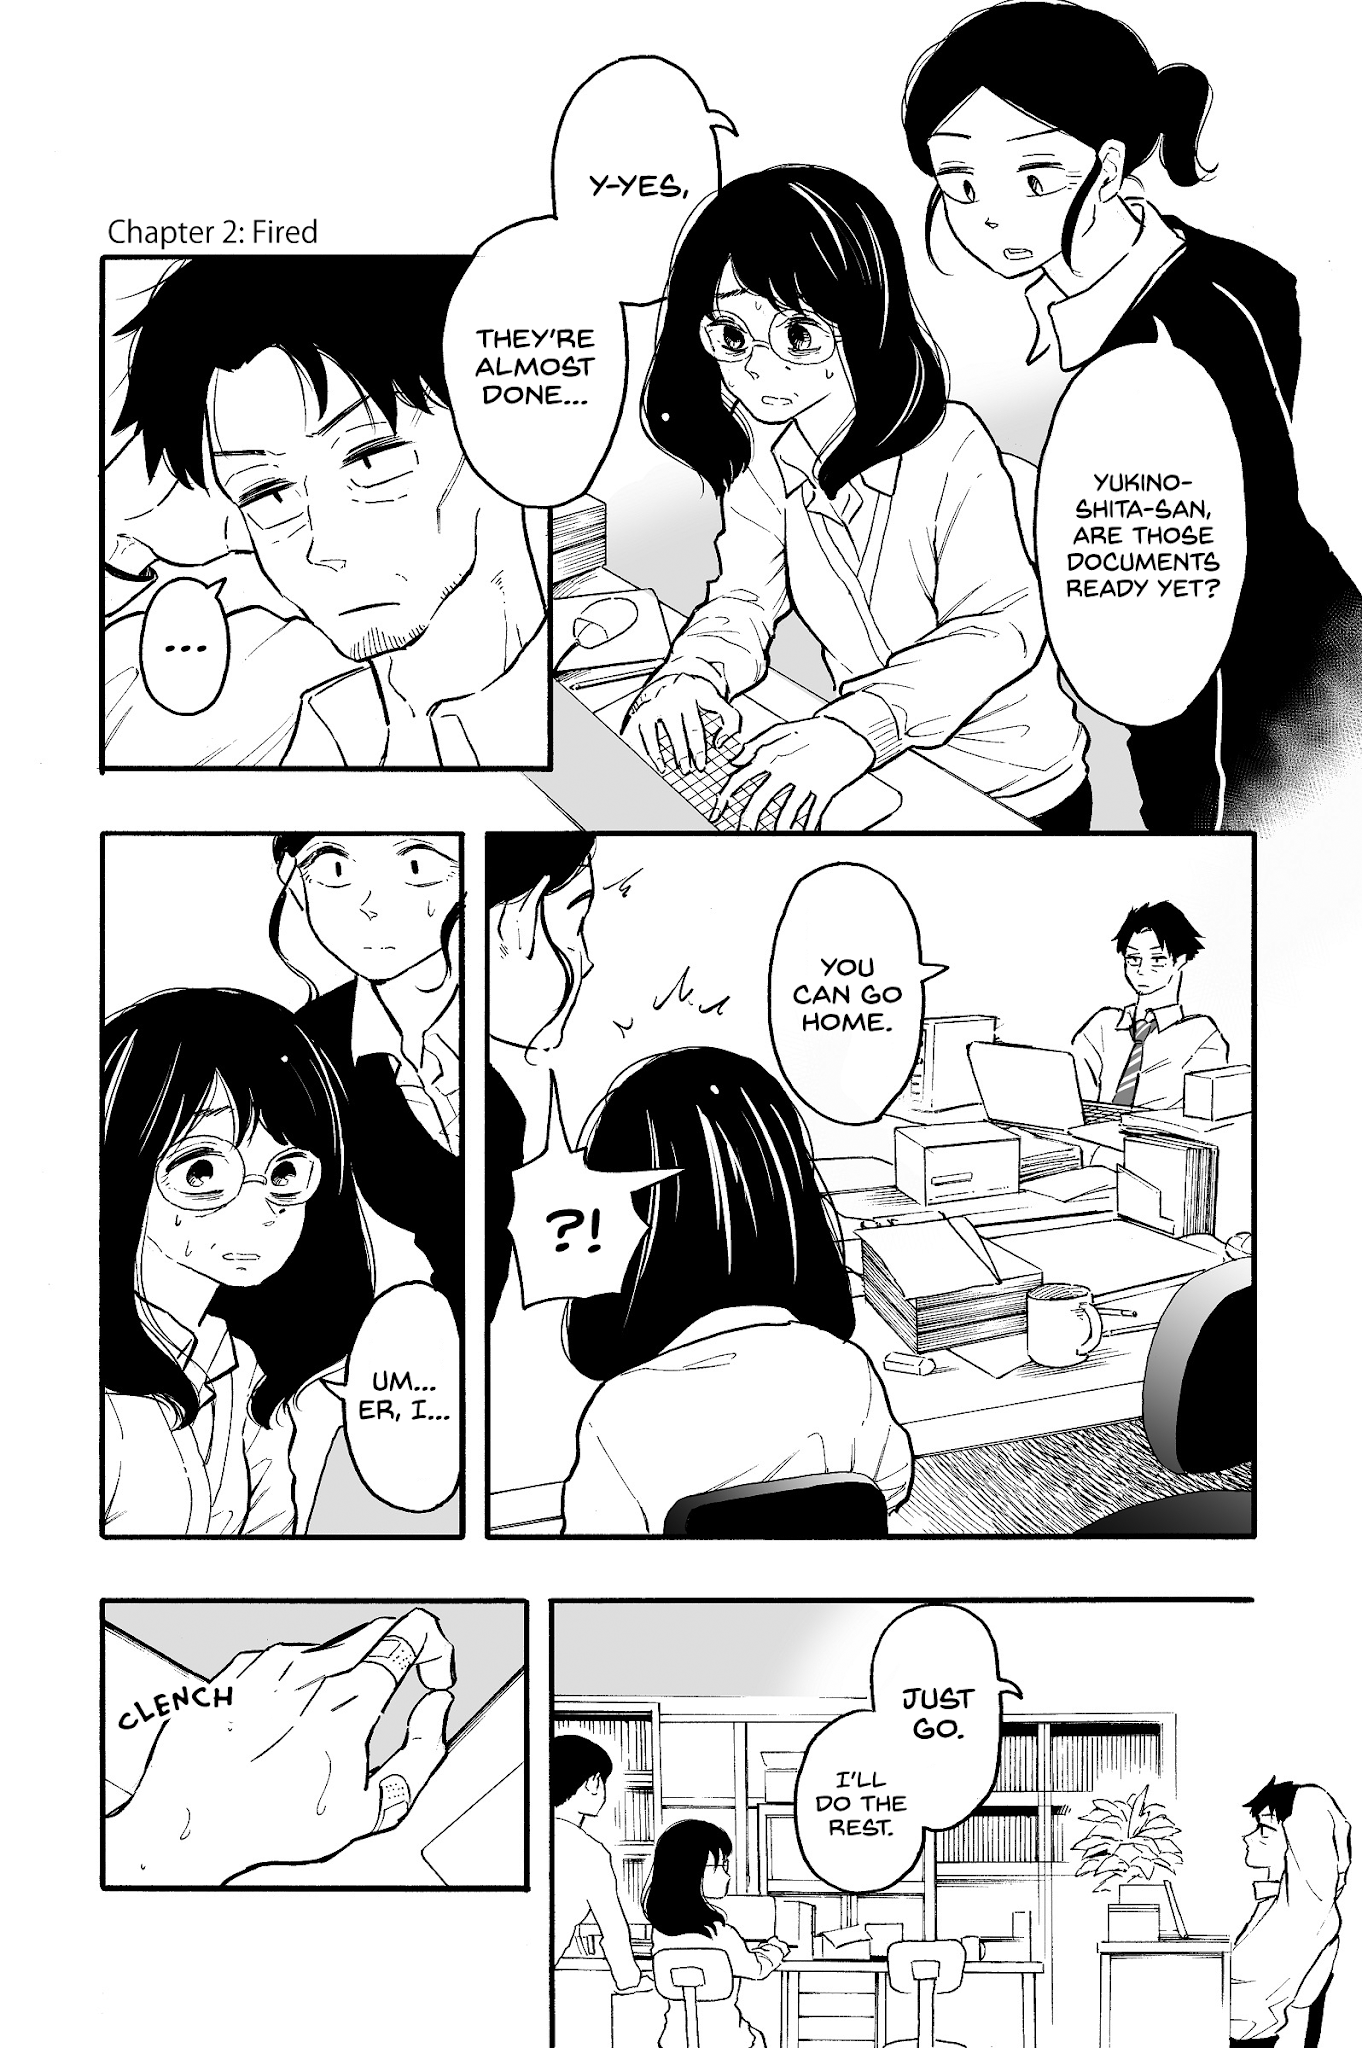 Yukinoshita-San And Her Manager - Page 1